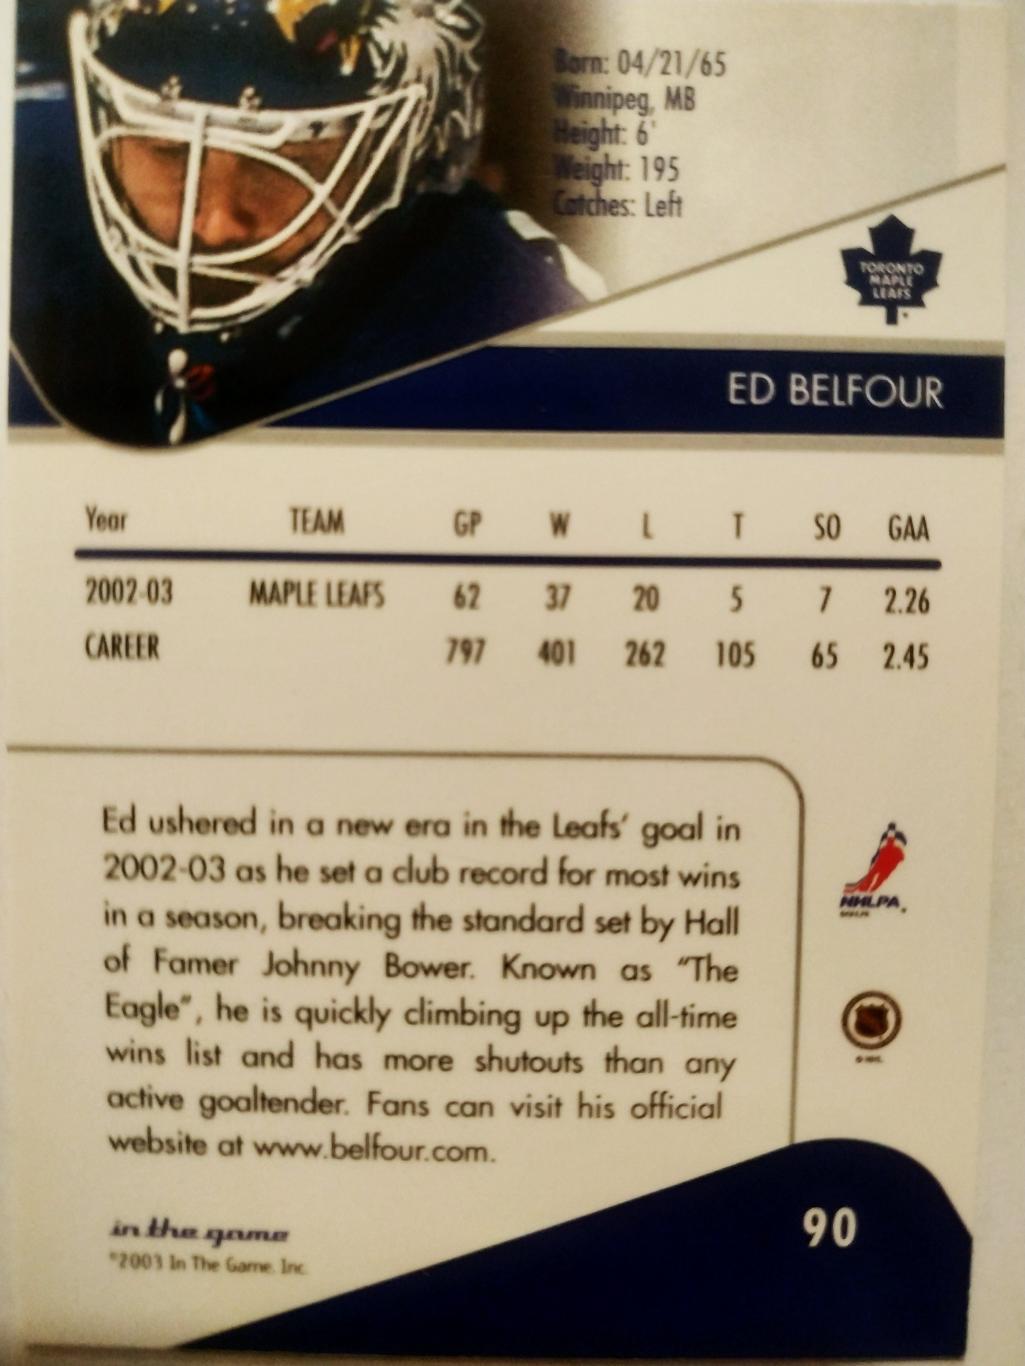 ХОККЕЙ КАРТОЧКА НХЛ IN THE GAME 2003 NHL ED BELFOUR TORONTO MAPLE LEAFS #90 1